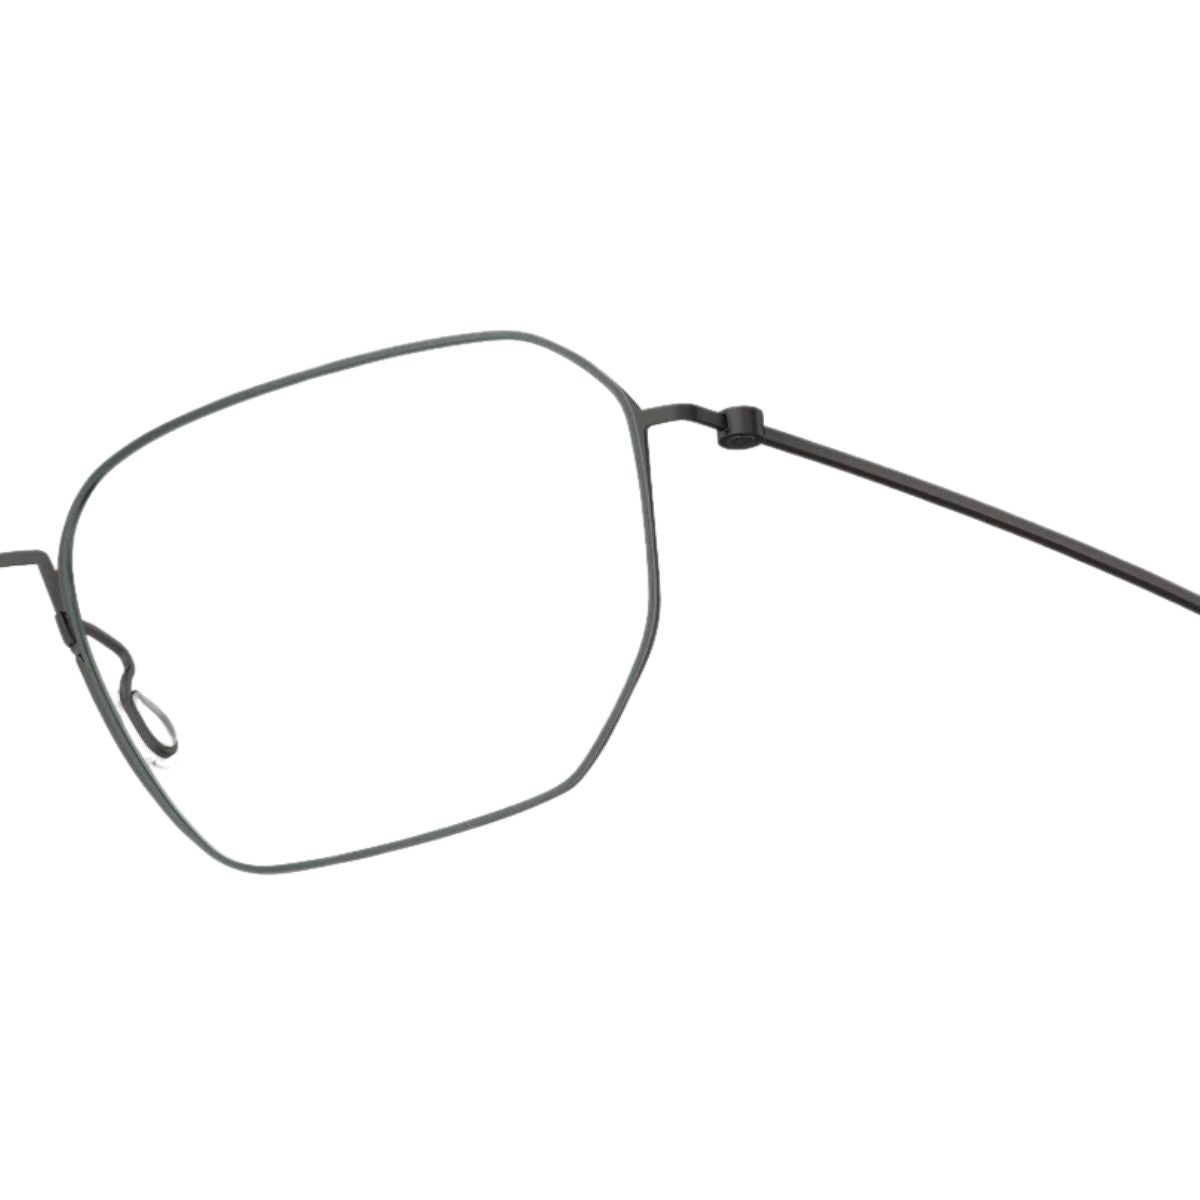 "Buy Stylish Lindberg Optical Glasses For Men's & Women's At Optorium"